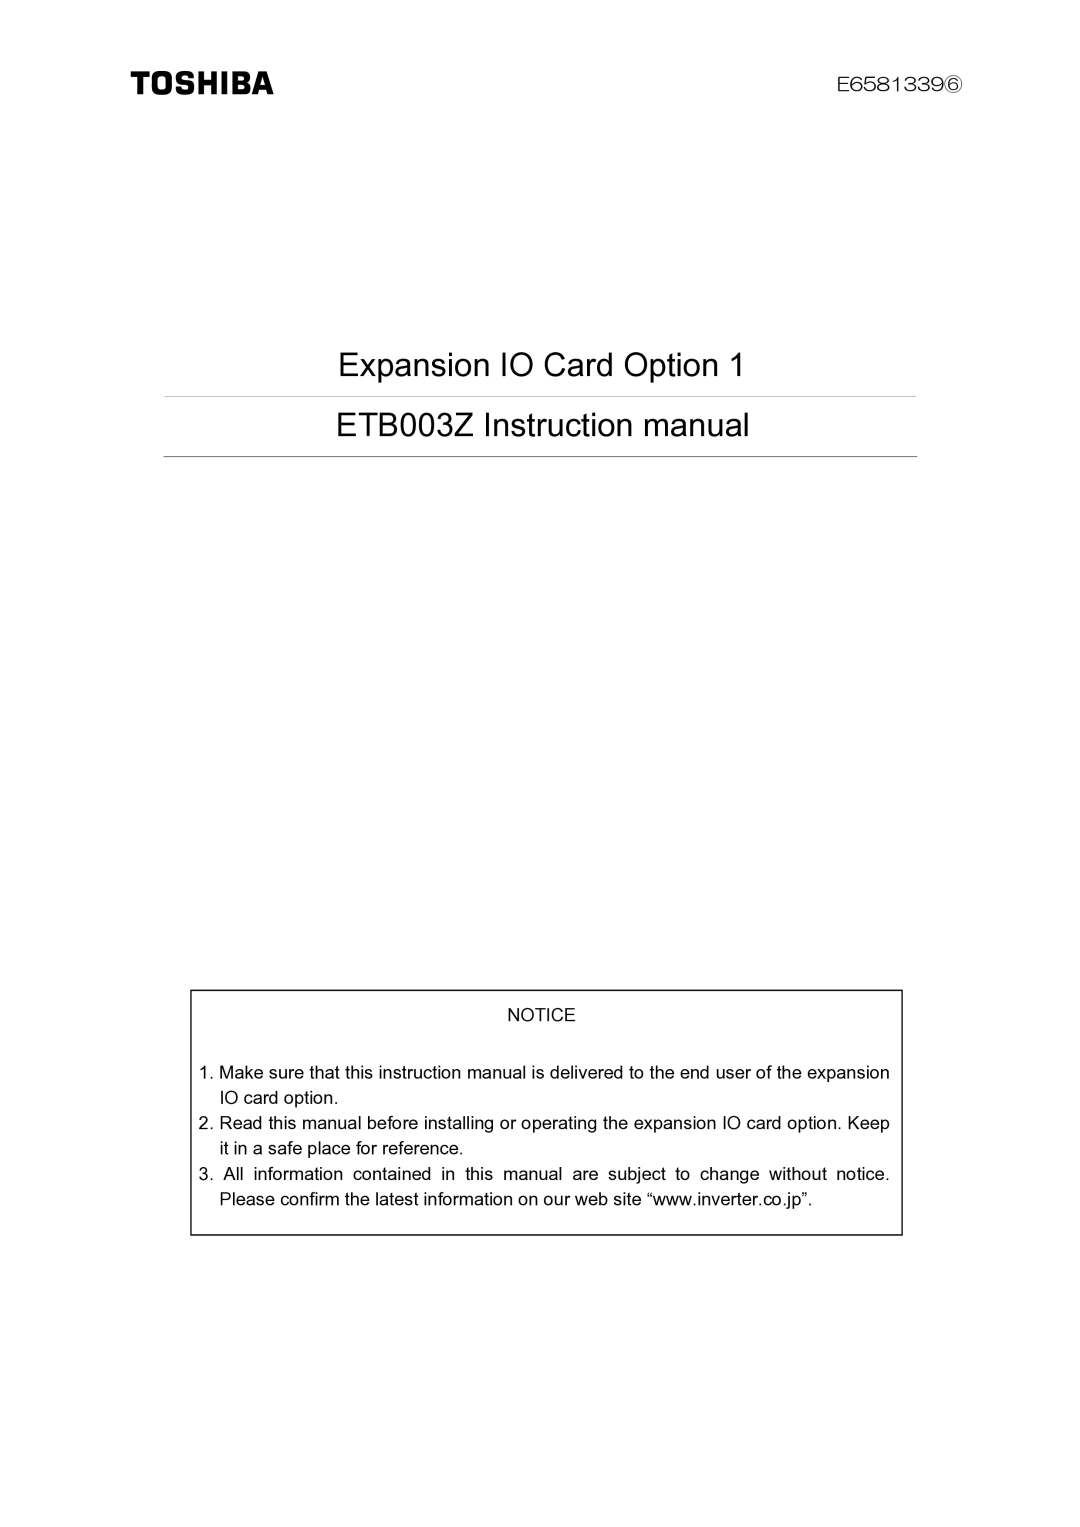 Toshiba ETB003Z instruction manual Expansion IO Card Option 